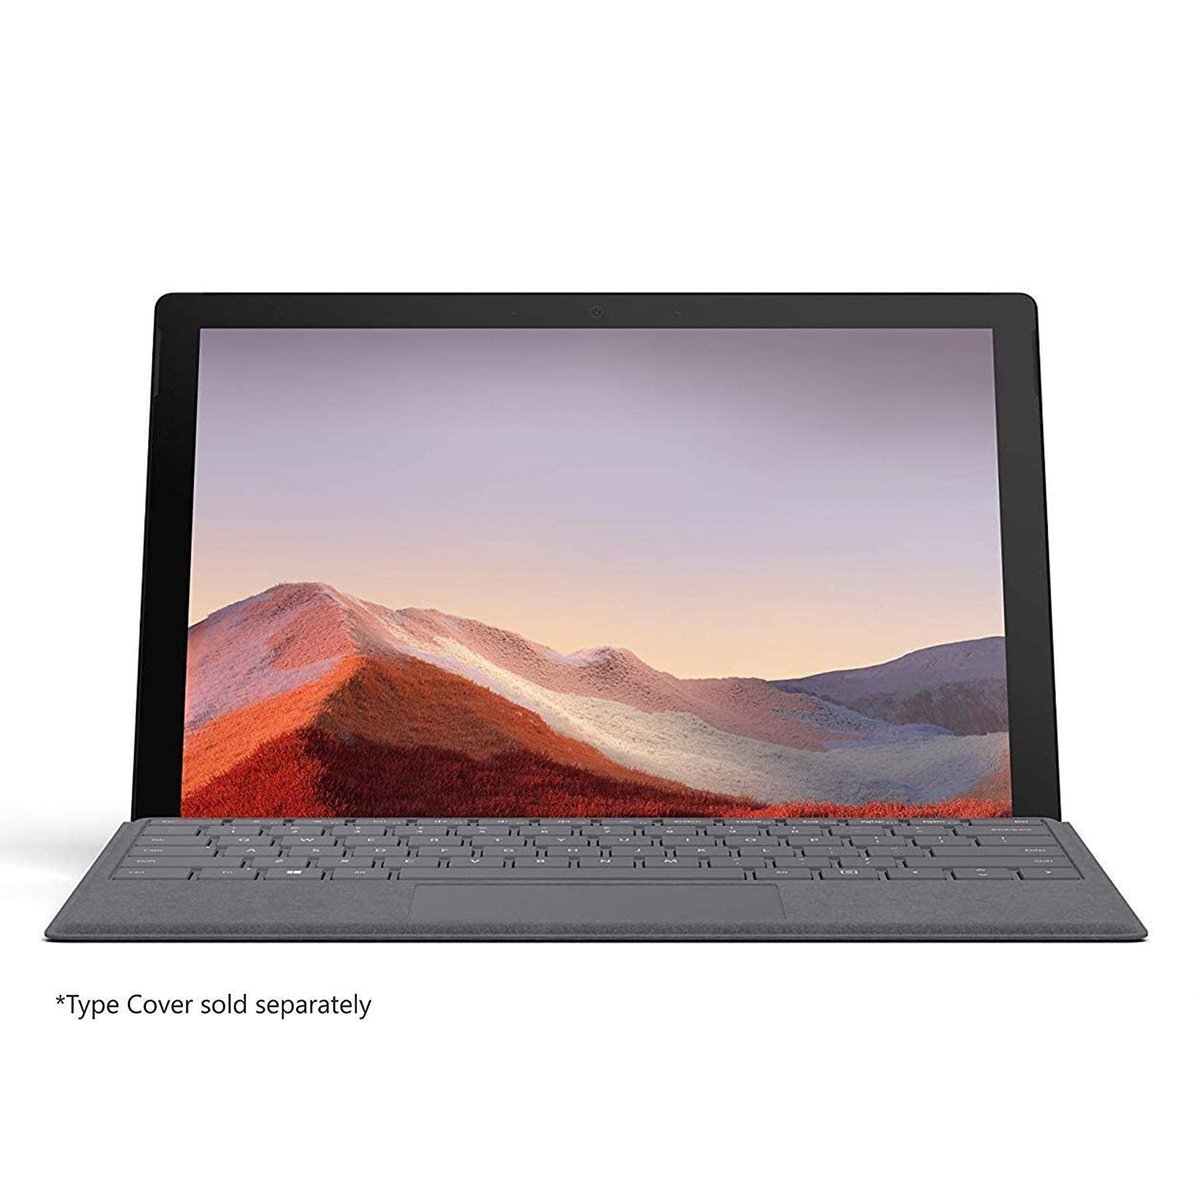 Microsoft Surface Pro 7 (VNX-00020+FMM00014), 2-in-1 Laptop, Intel Core i7-1065G7, 12.3 Inch, 256GB SSD, 16GB RAM, Intel Iris Plus Graphics, Windows10,Black+Type Cover